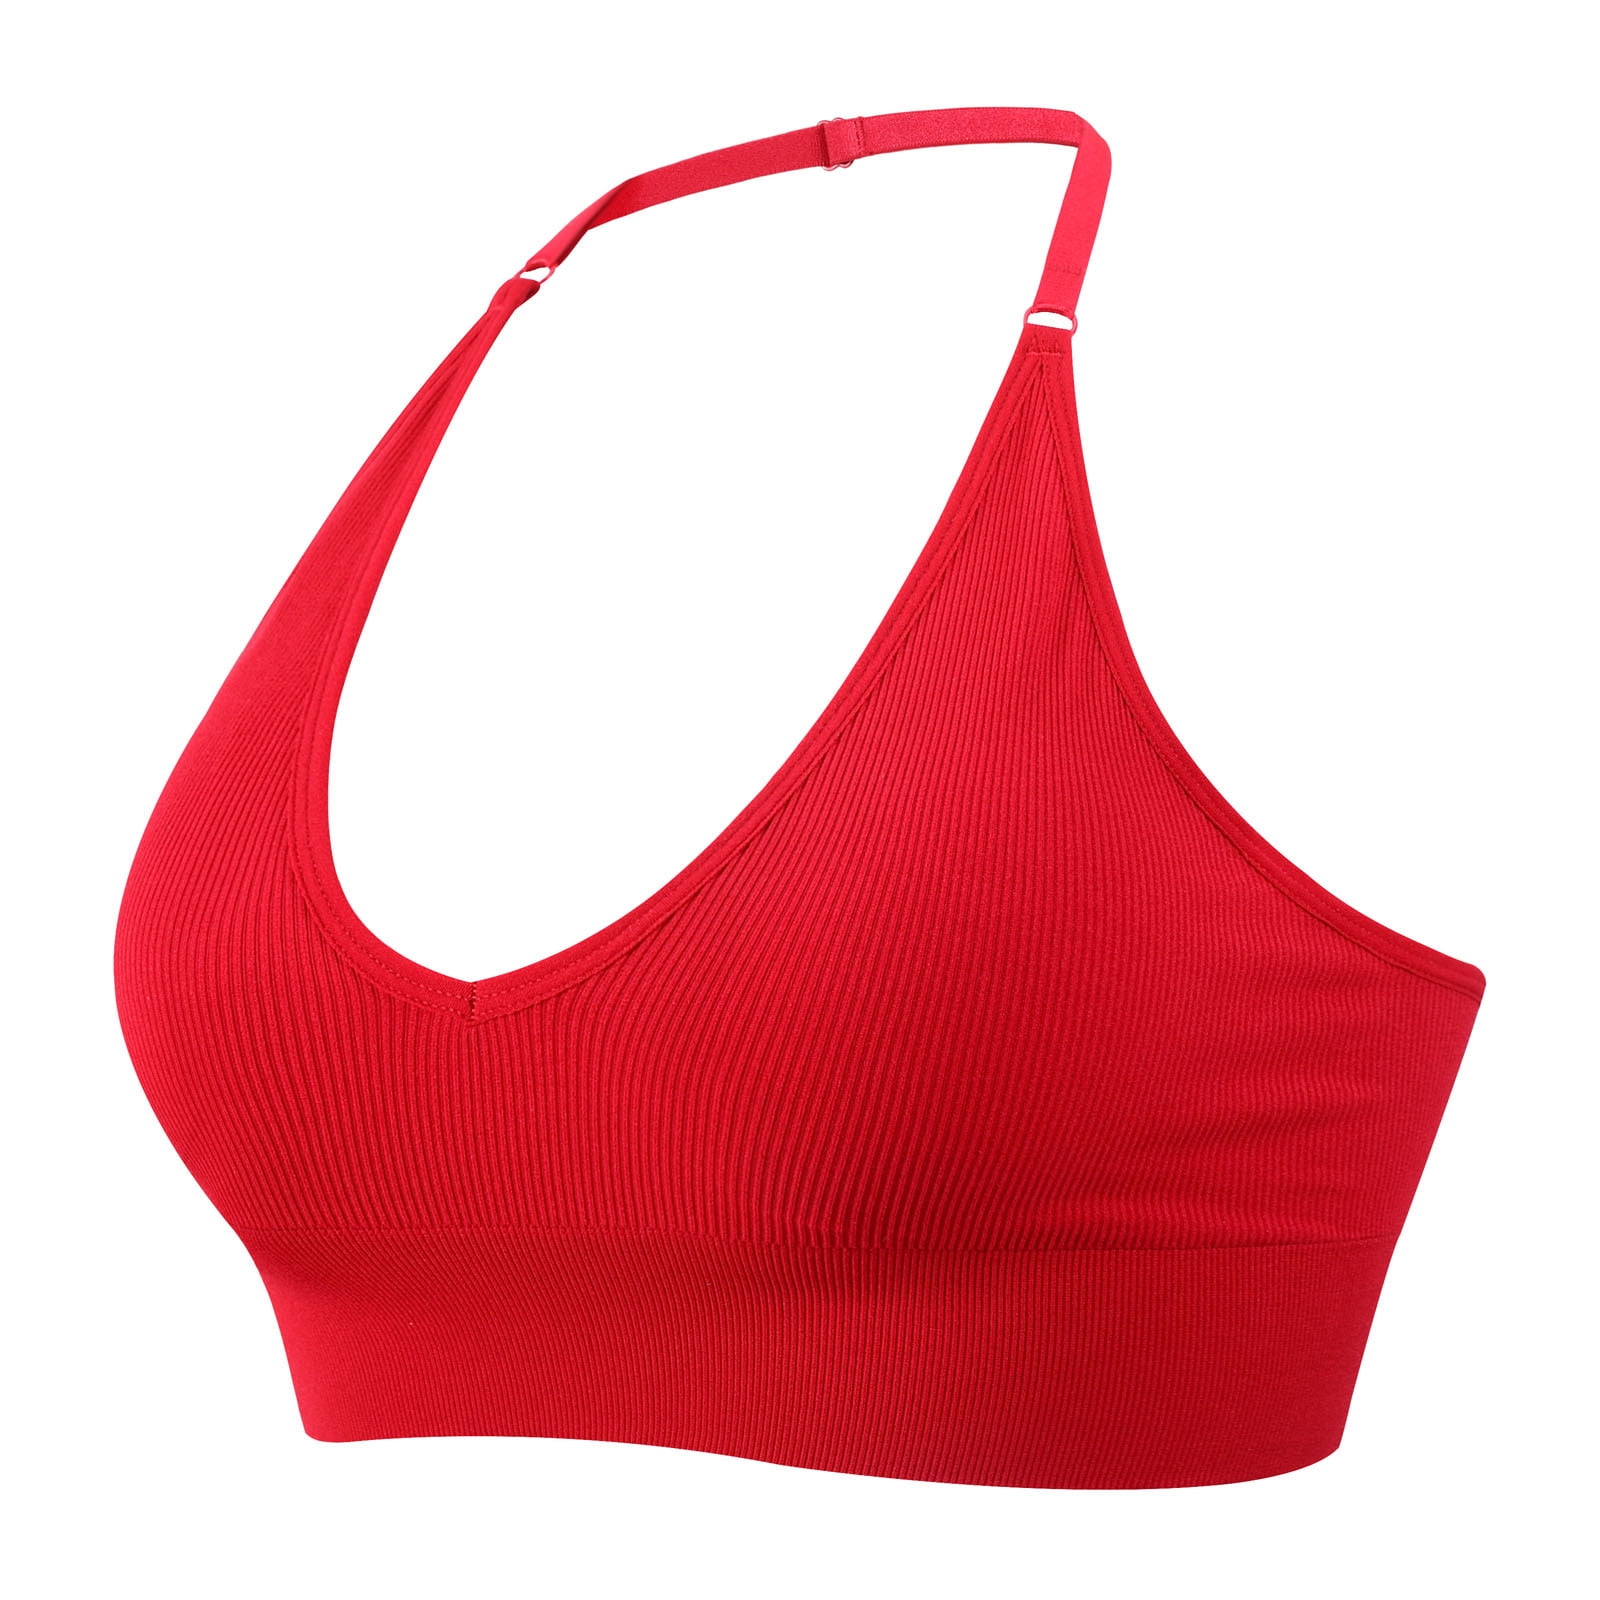 RYRJJ Clearance Women Halter Bra Top Yoga Bralette Crop Tanks Workout Sports  Bras V Neck with Adjustable Spaghetti Strap Seamless Padded T Shirt Bra(Red,M)  